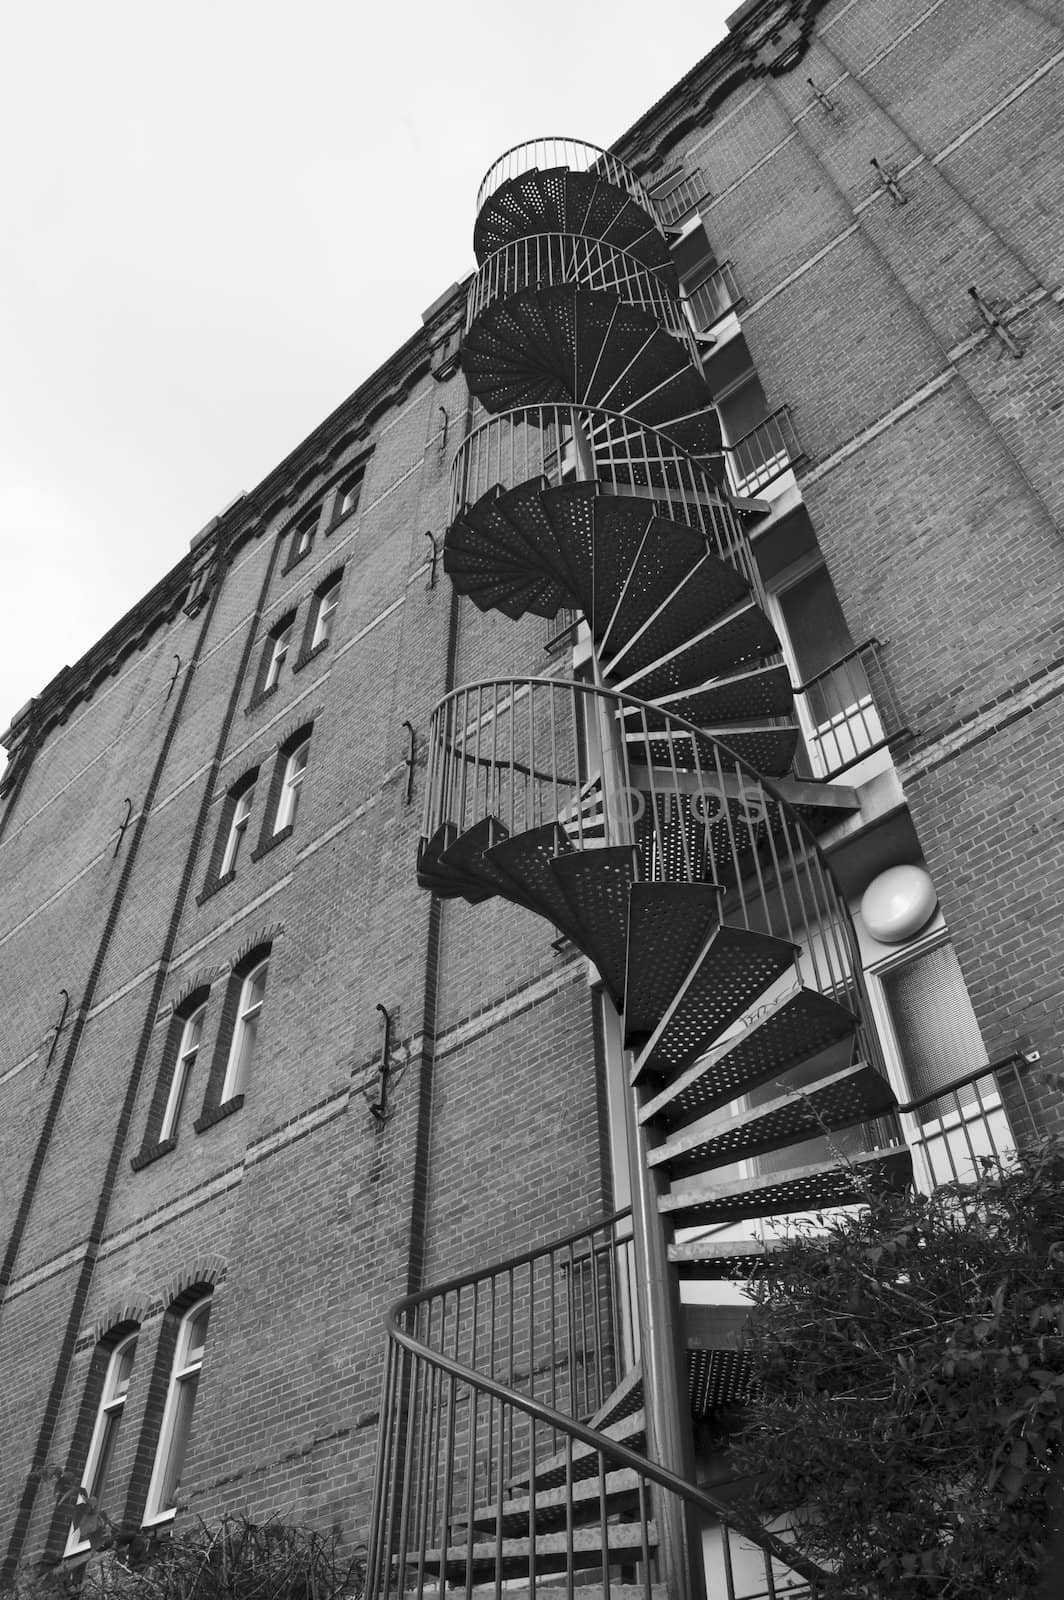 Winding stairway by Michalowski